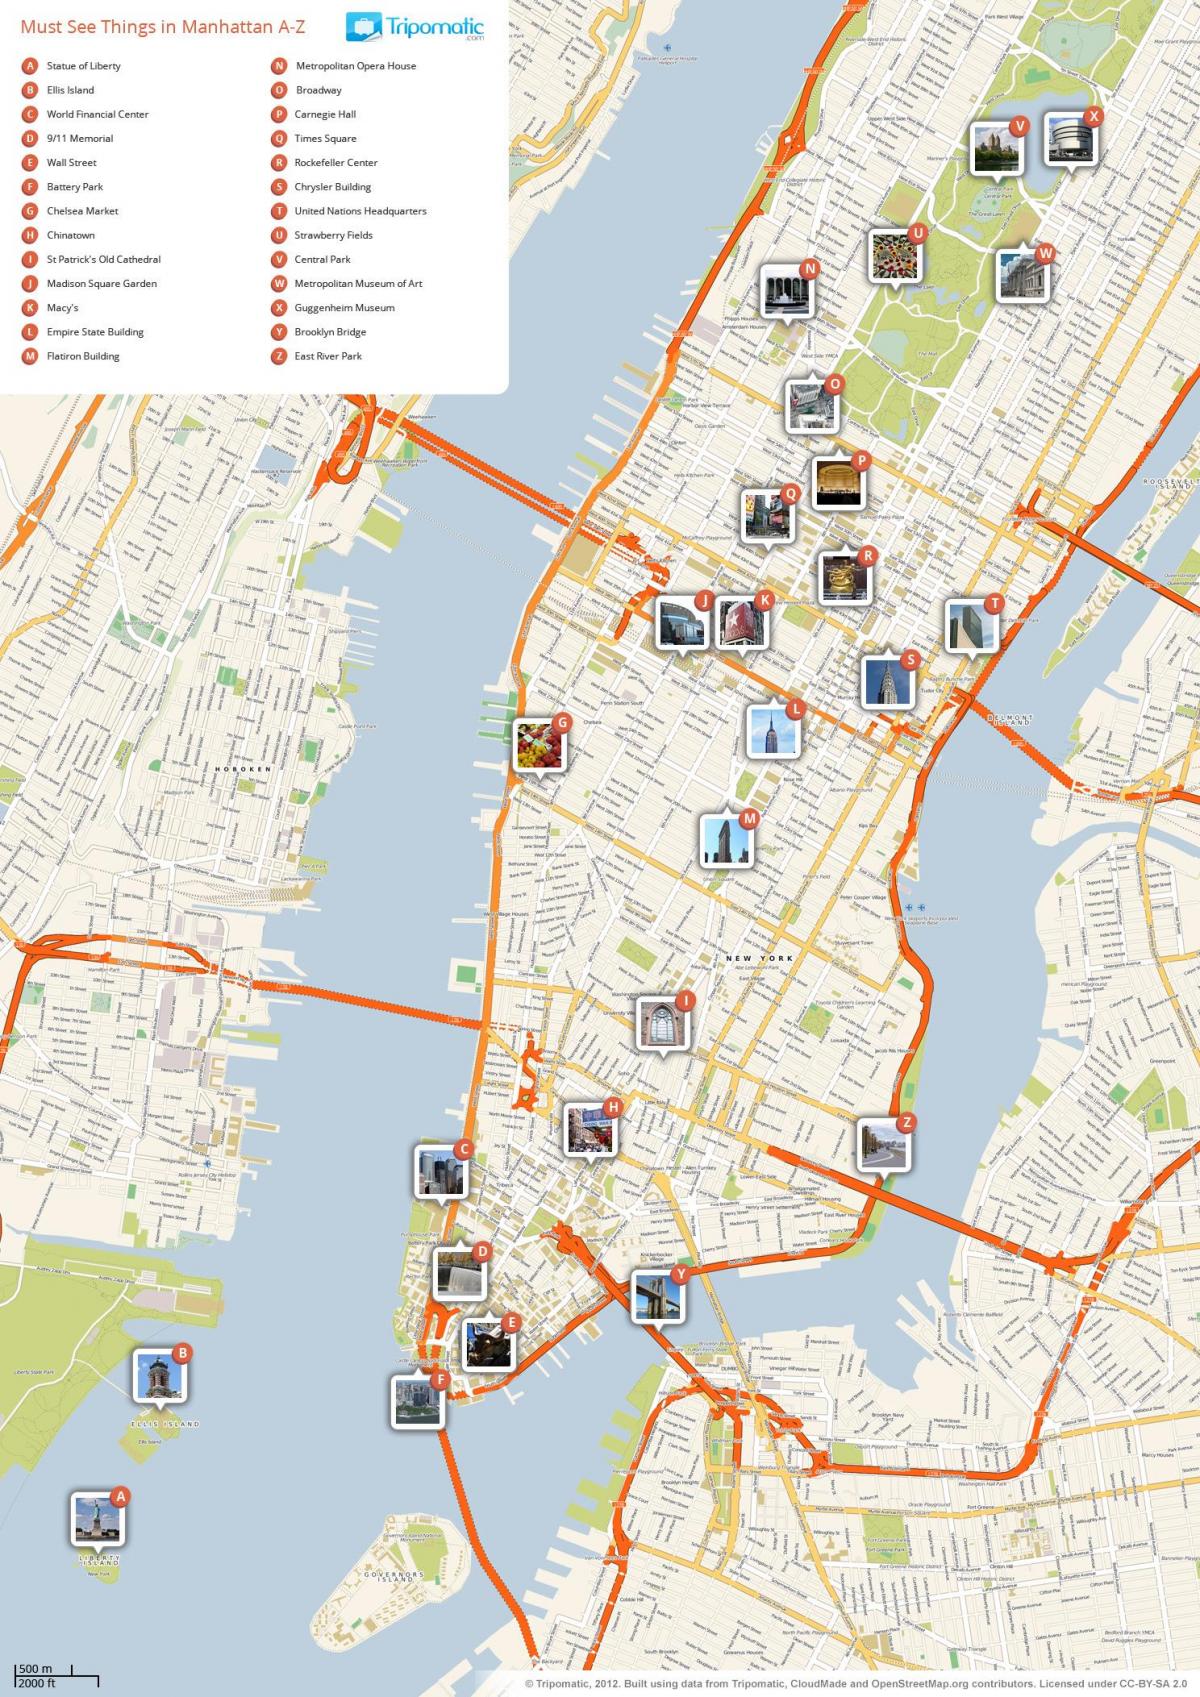 mapa de Manhattan mostrando lugares de interés turístico